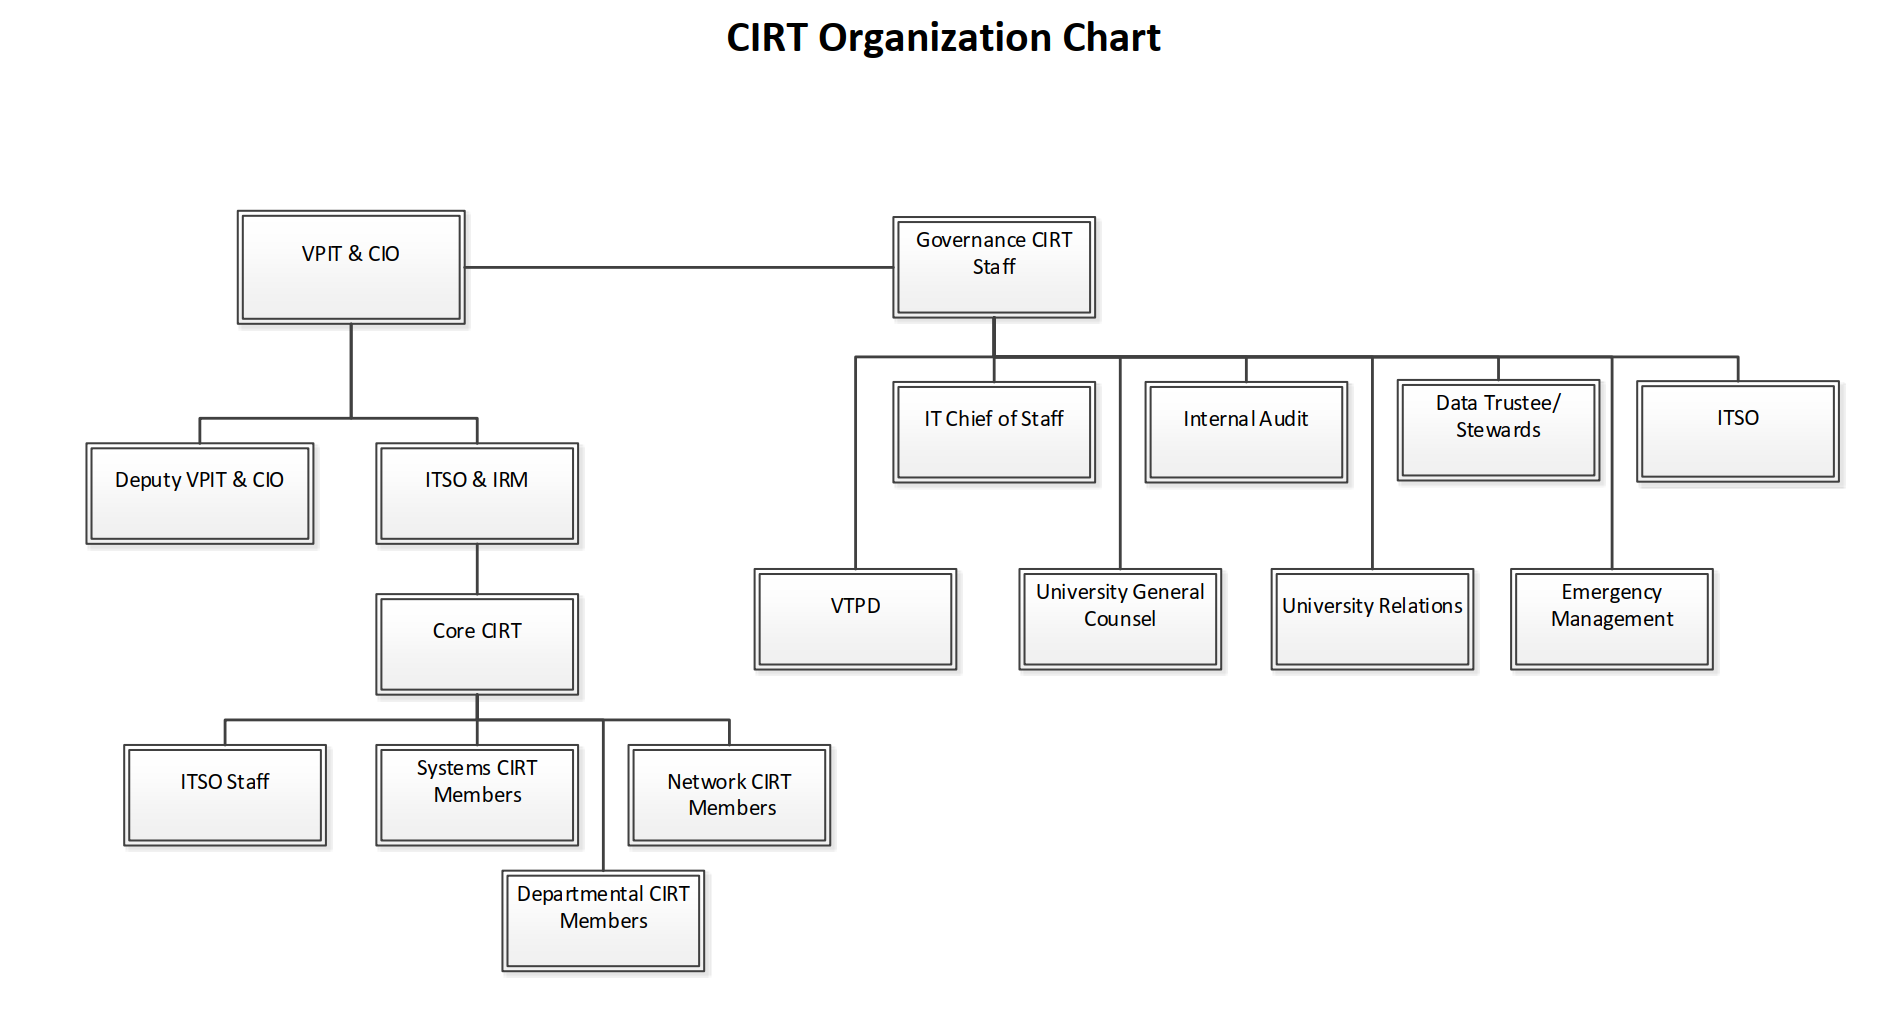 CIRT organization chart